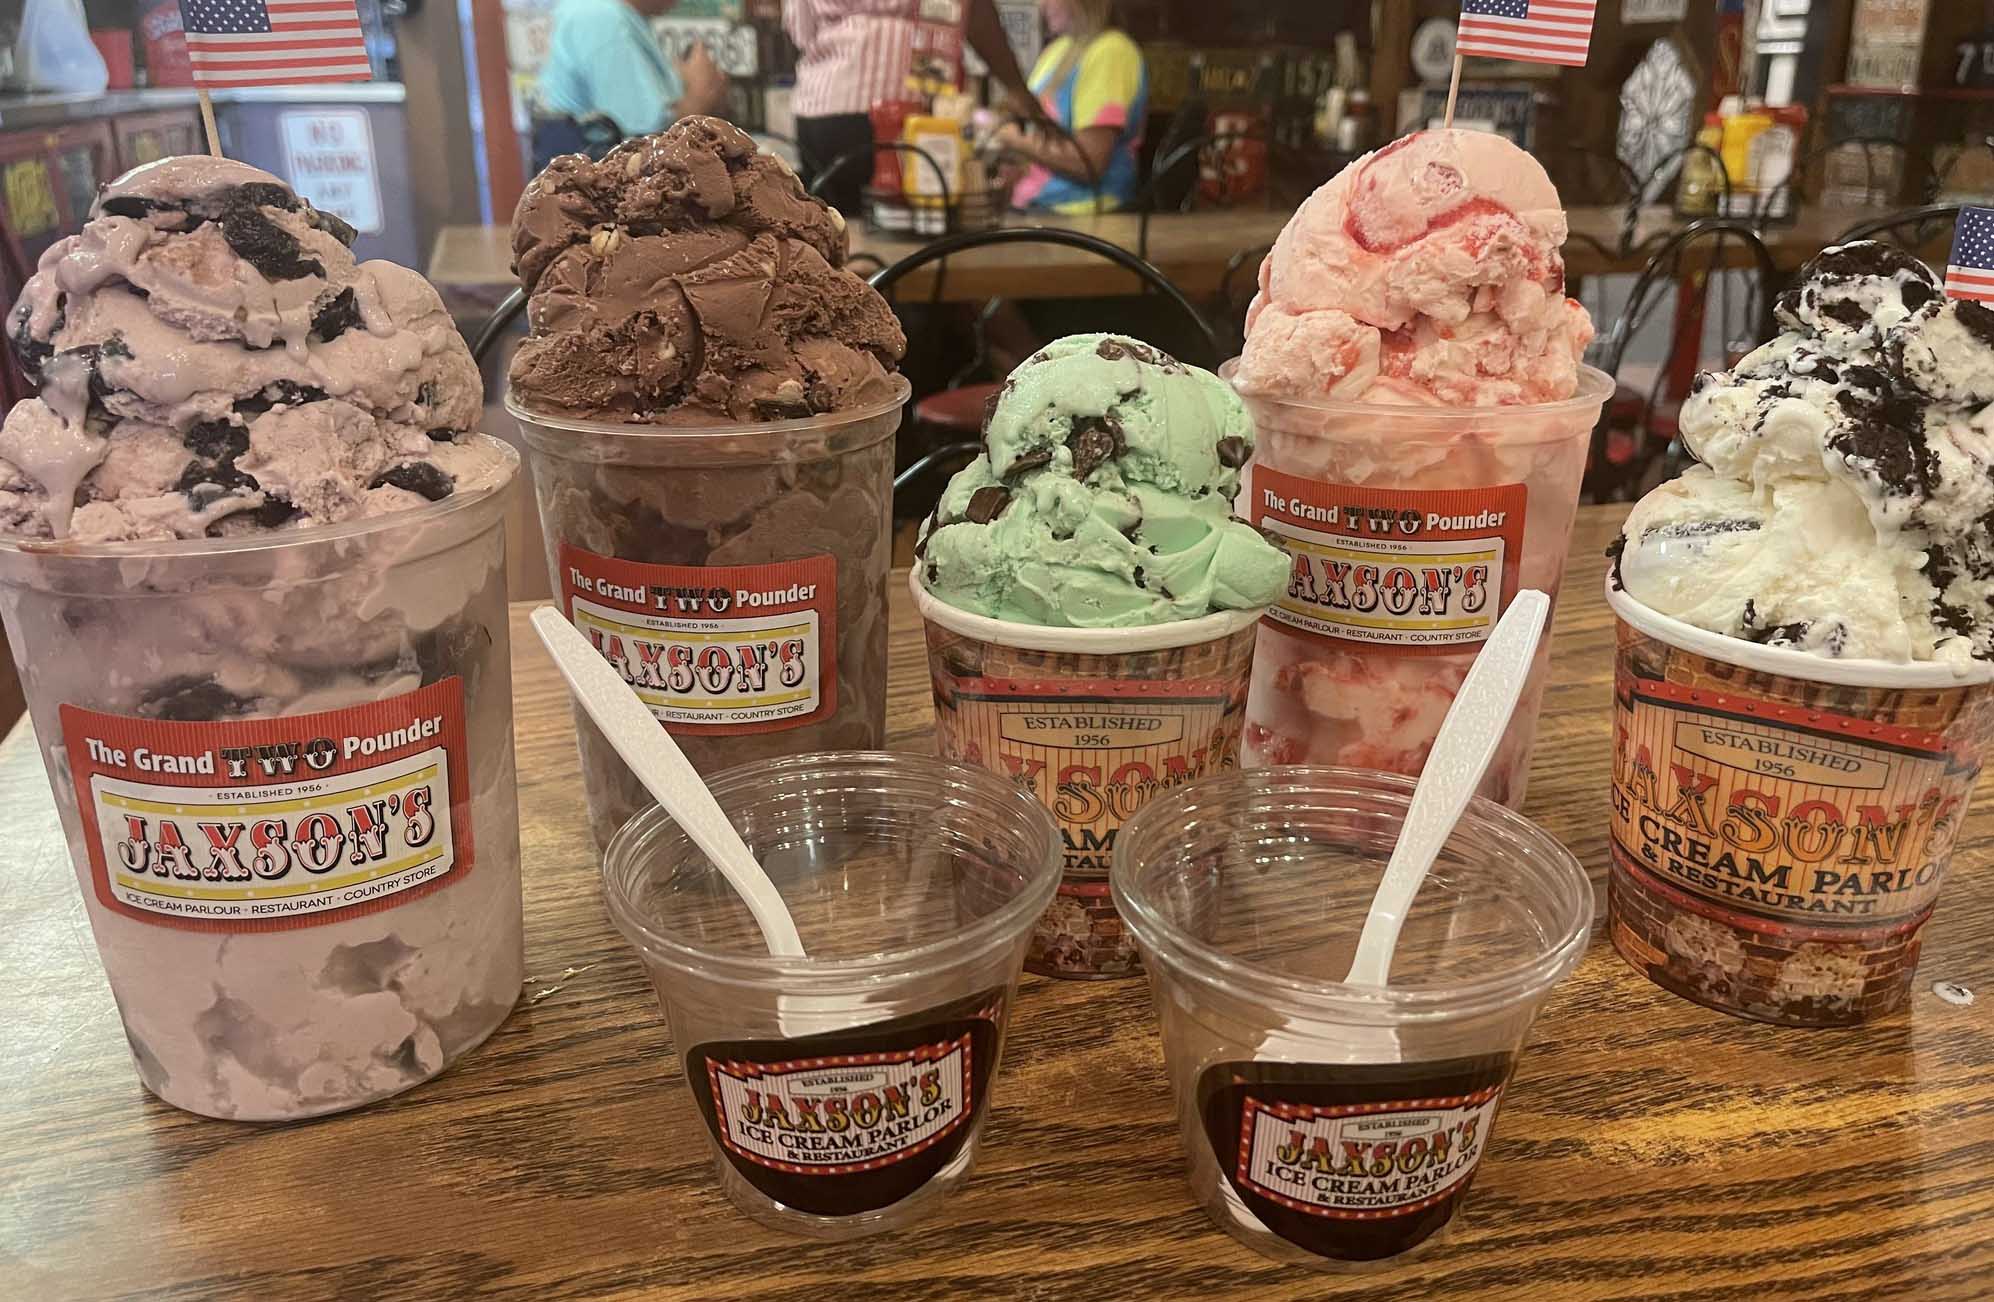 Jaxson's Ice Cream Parlor Options